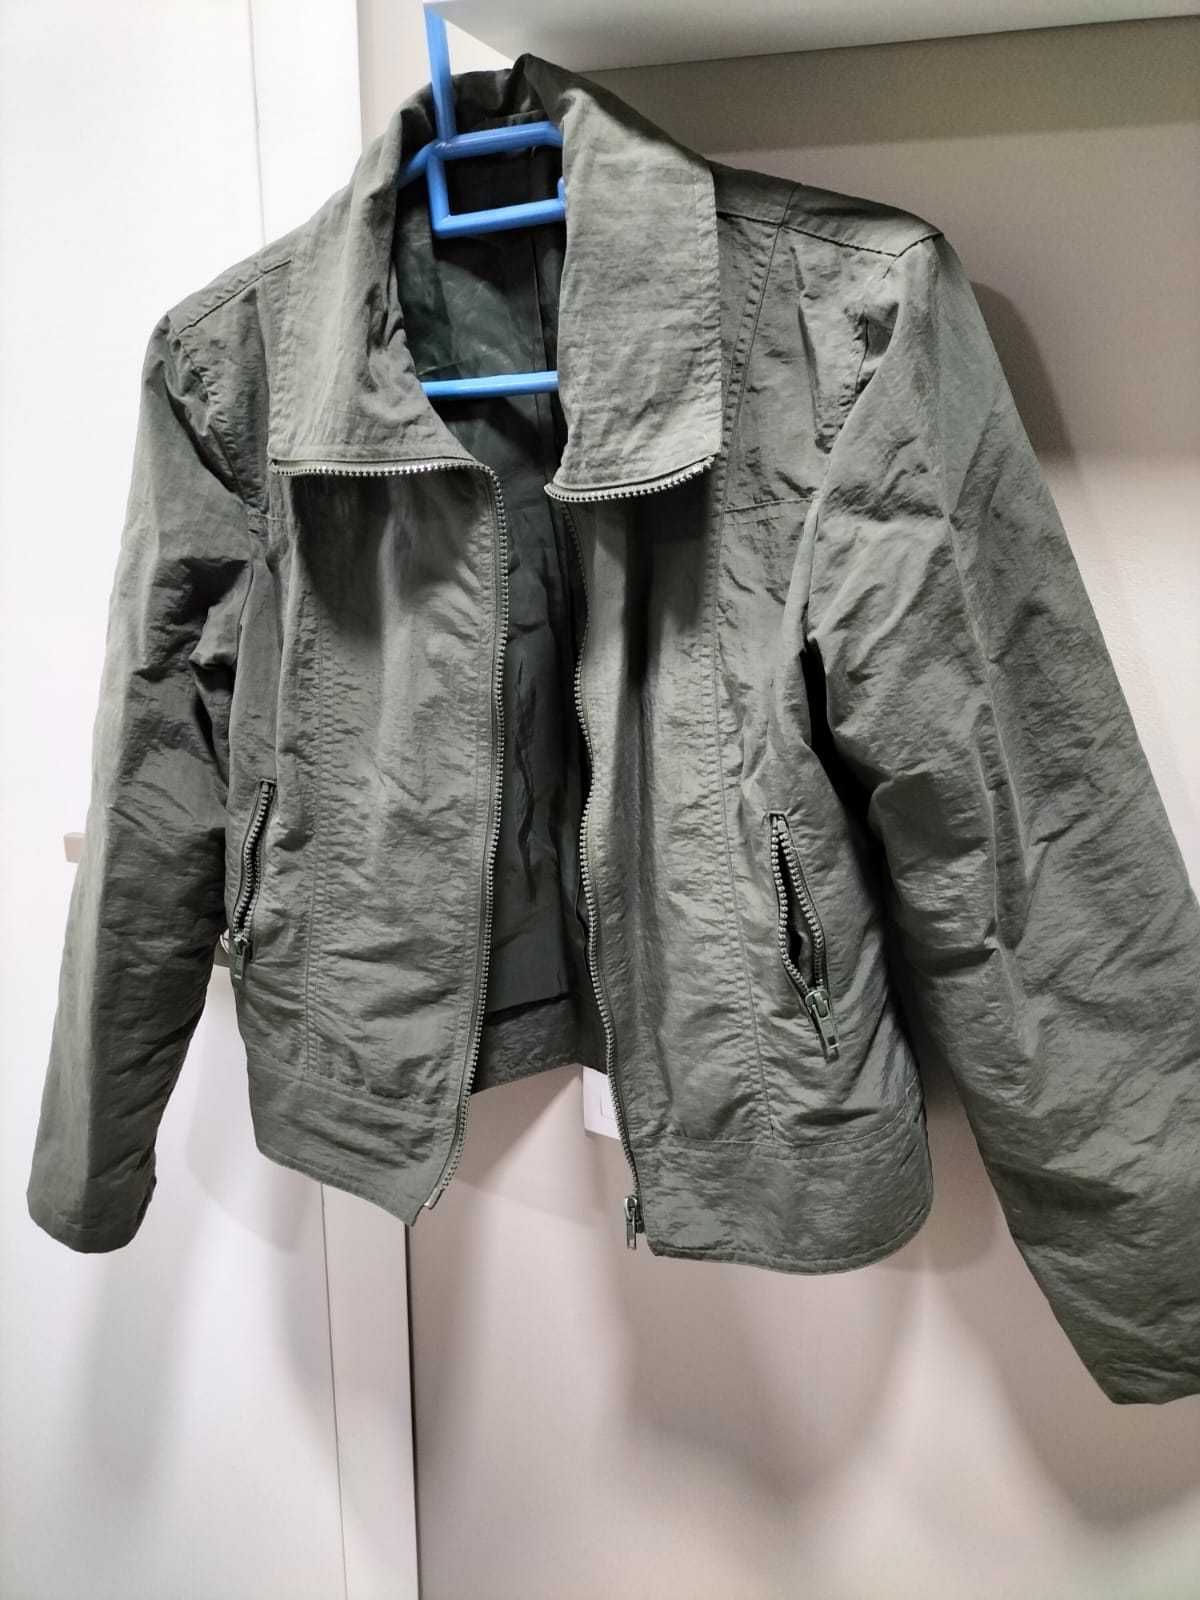 на весну куртка, тренч, пиджак - дешево, 42-46 размер